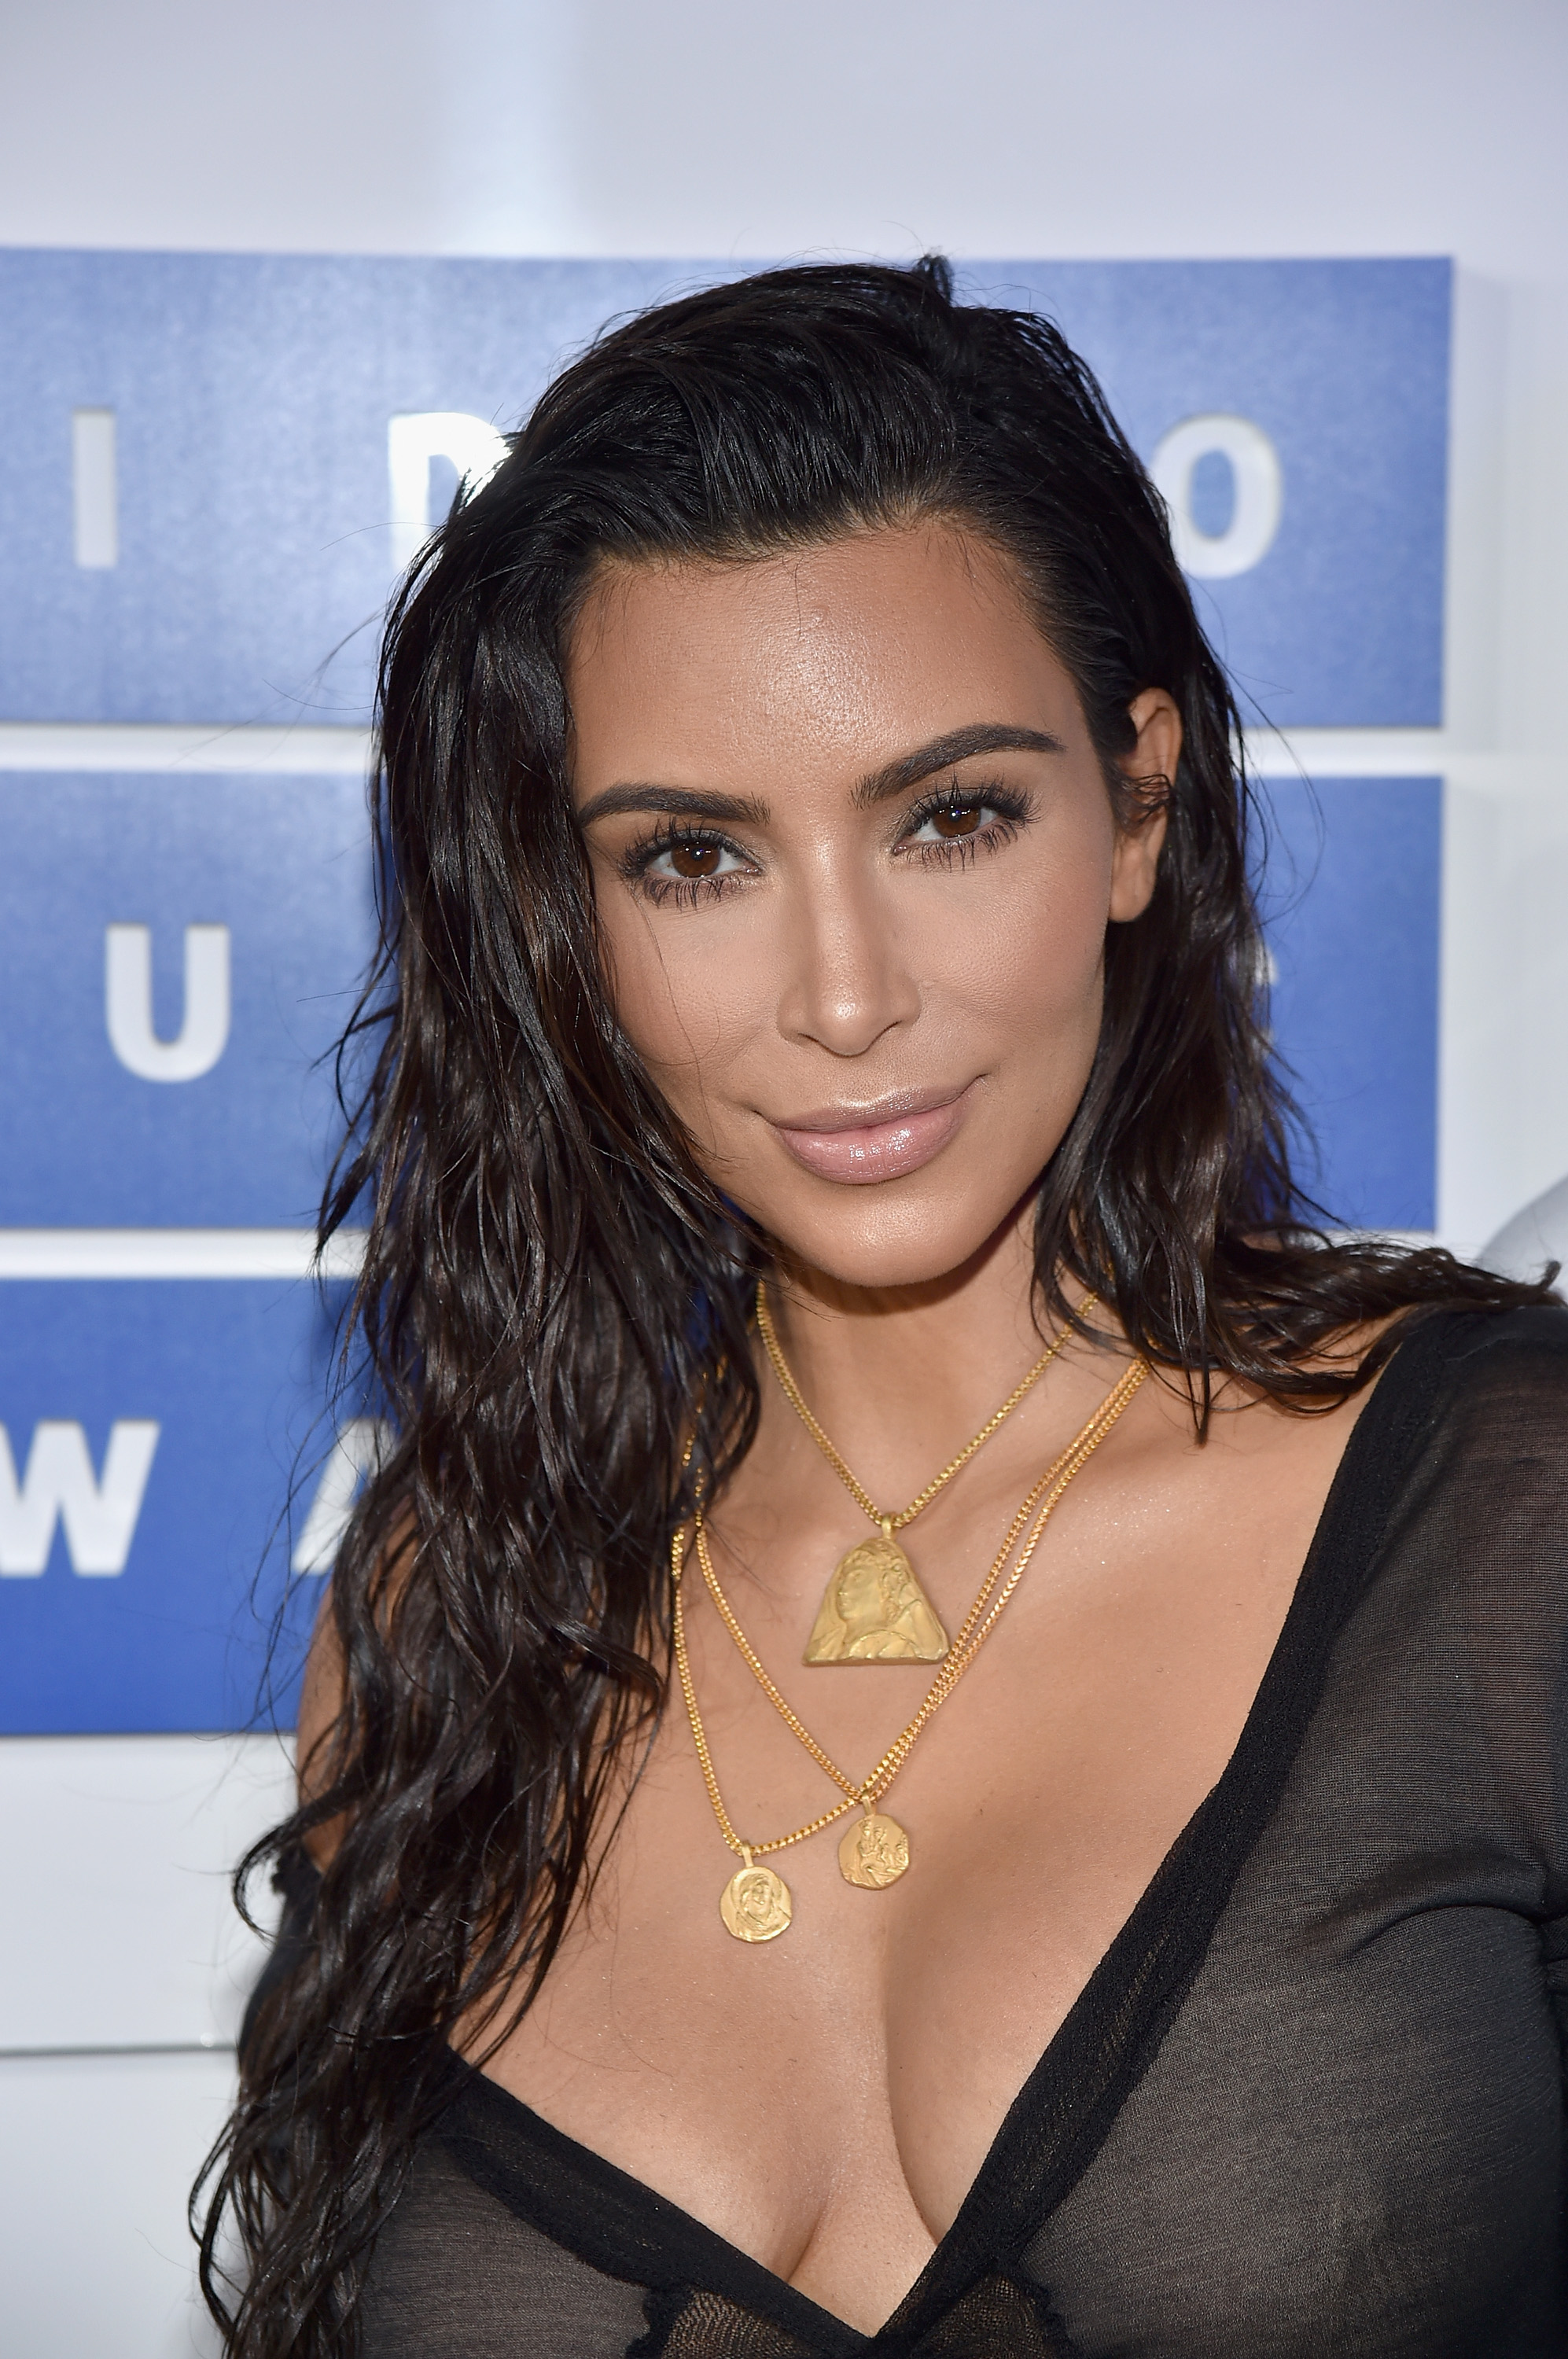 Kim Kardashian Cumshot Porn - Kardashian Facial Expressions Now Decoded For Your Convenience